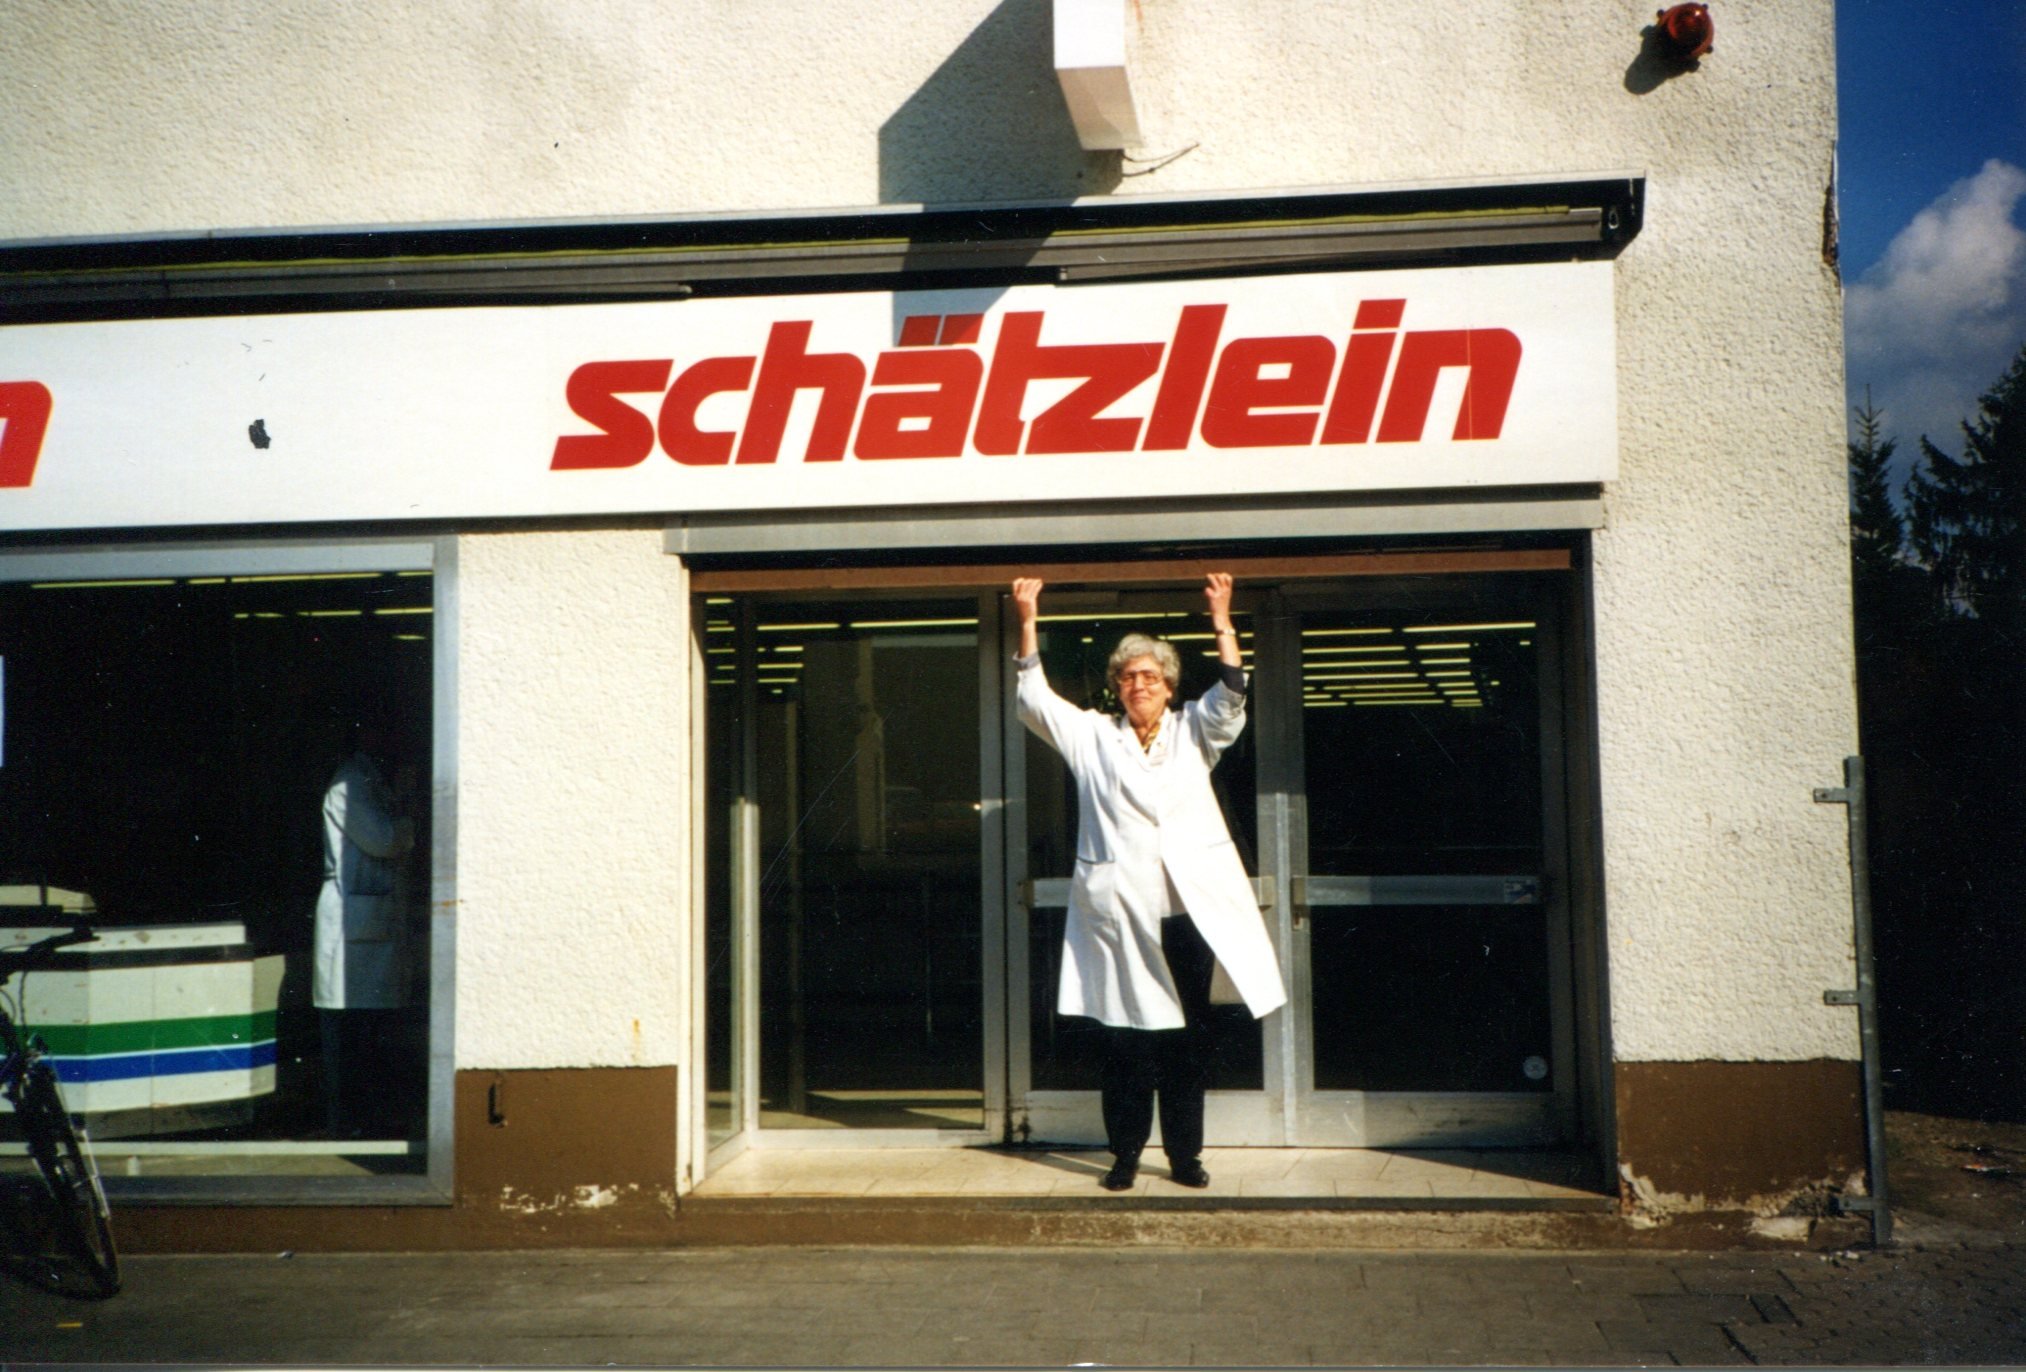 Geschäft | Kerpener Straße 33 | Lebensmittel schätzlein | ca. 1990 (Heimatmuseum Sindorf CC BY-NC-SA)